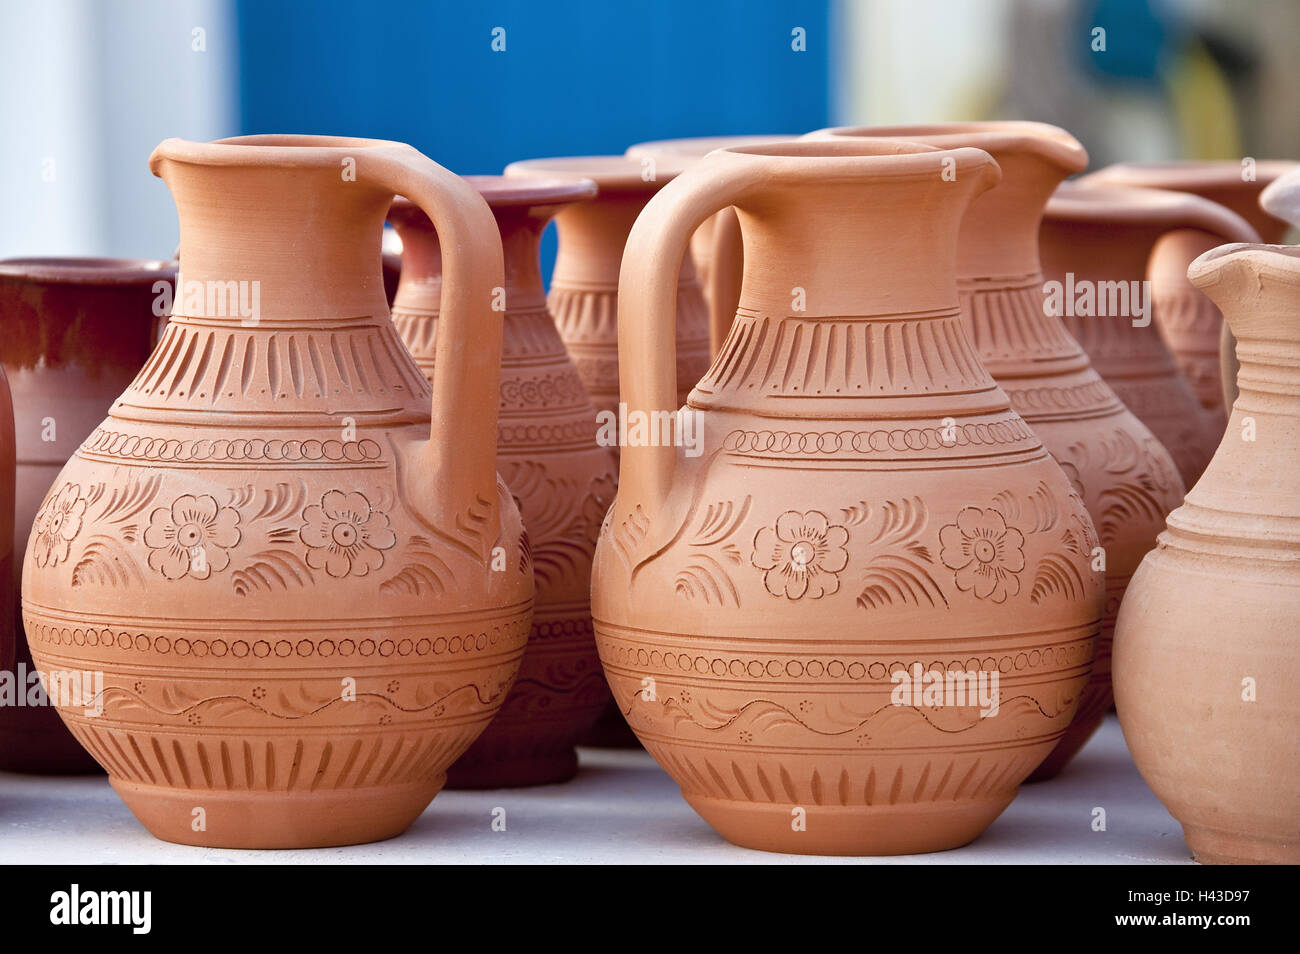 Cyprus, Agia Napa, sales hand-made tone jugs, Stock Photo